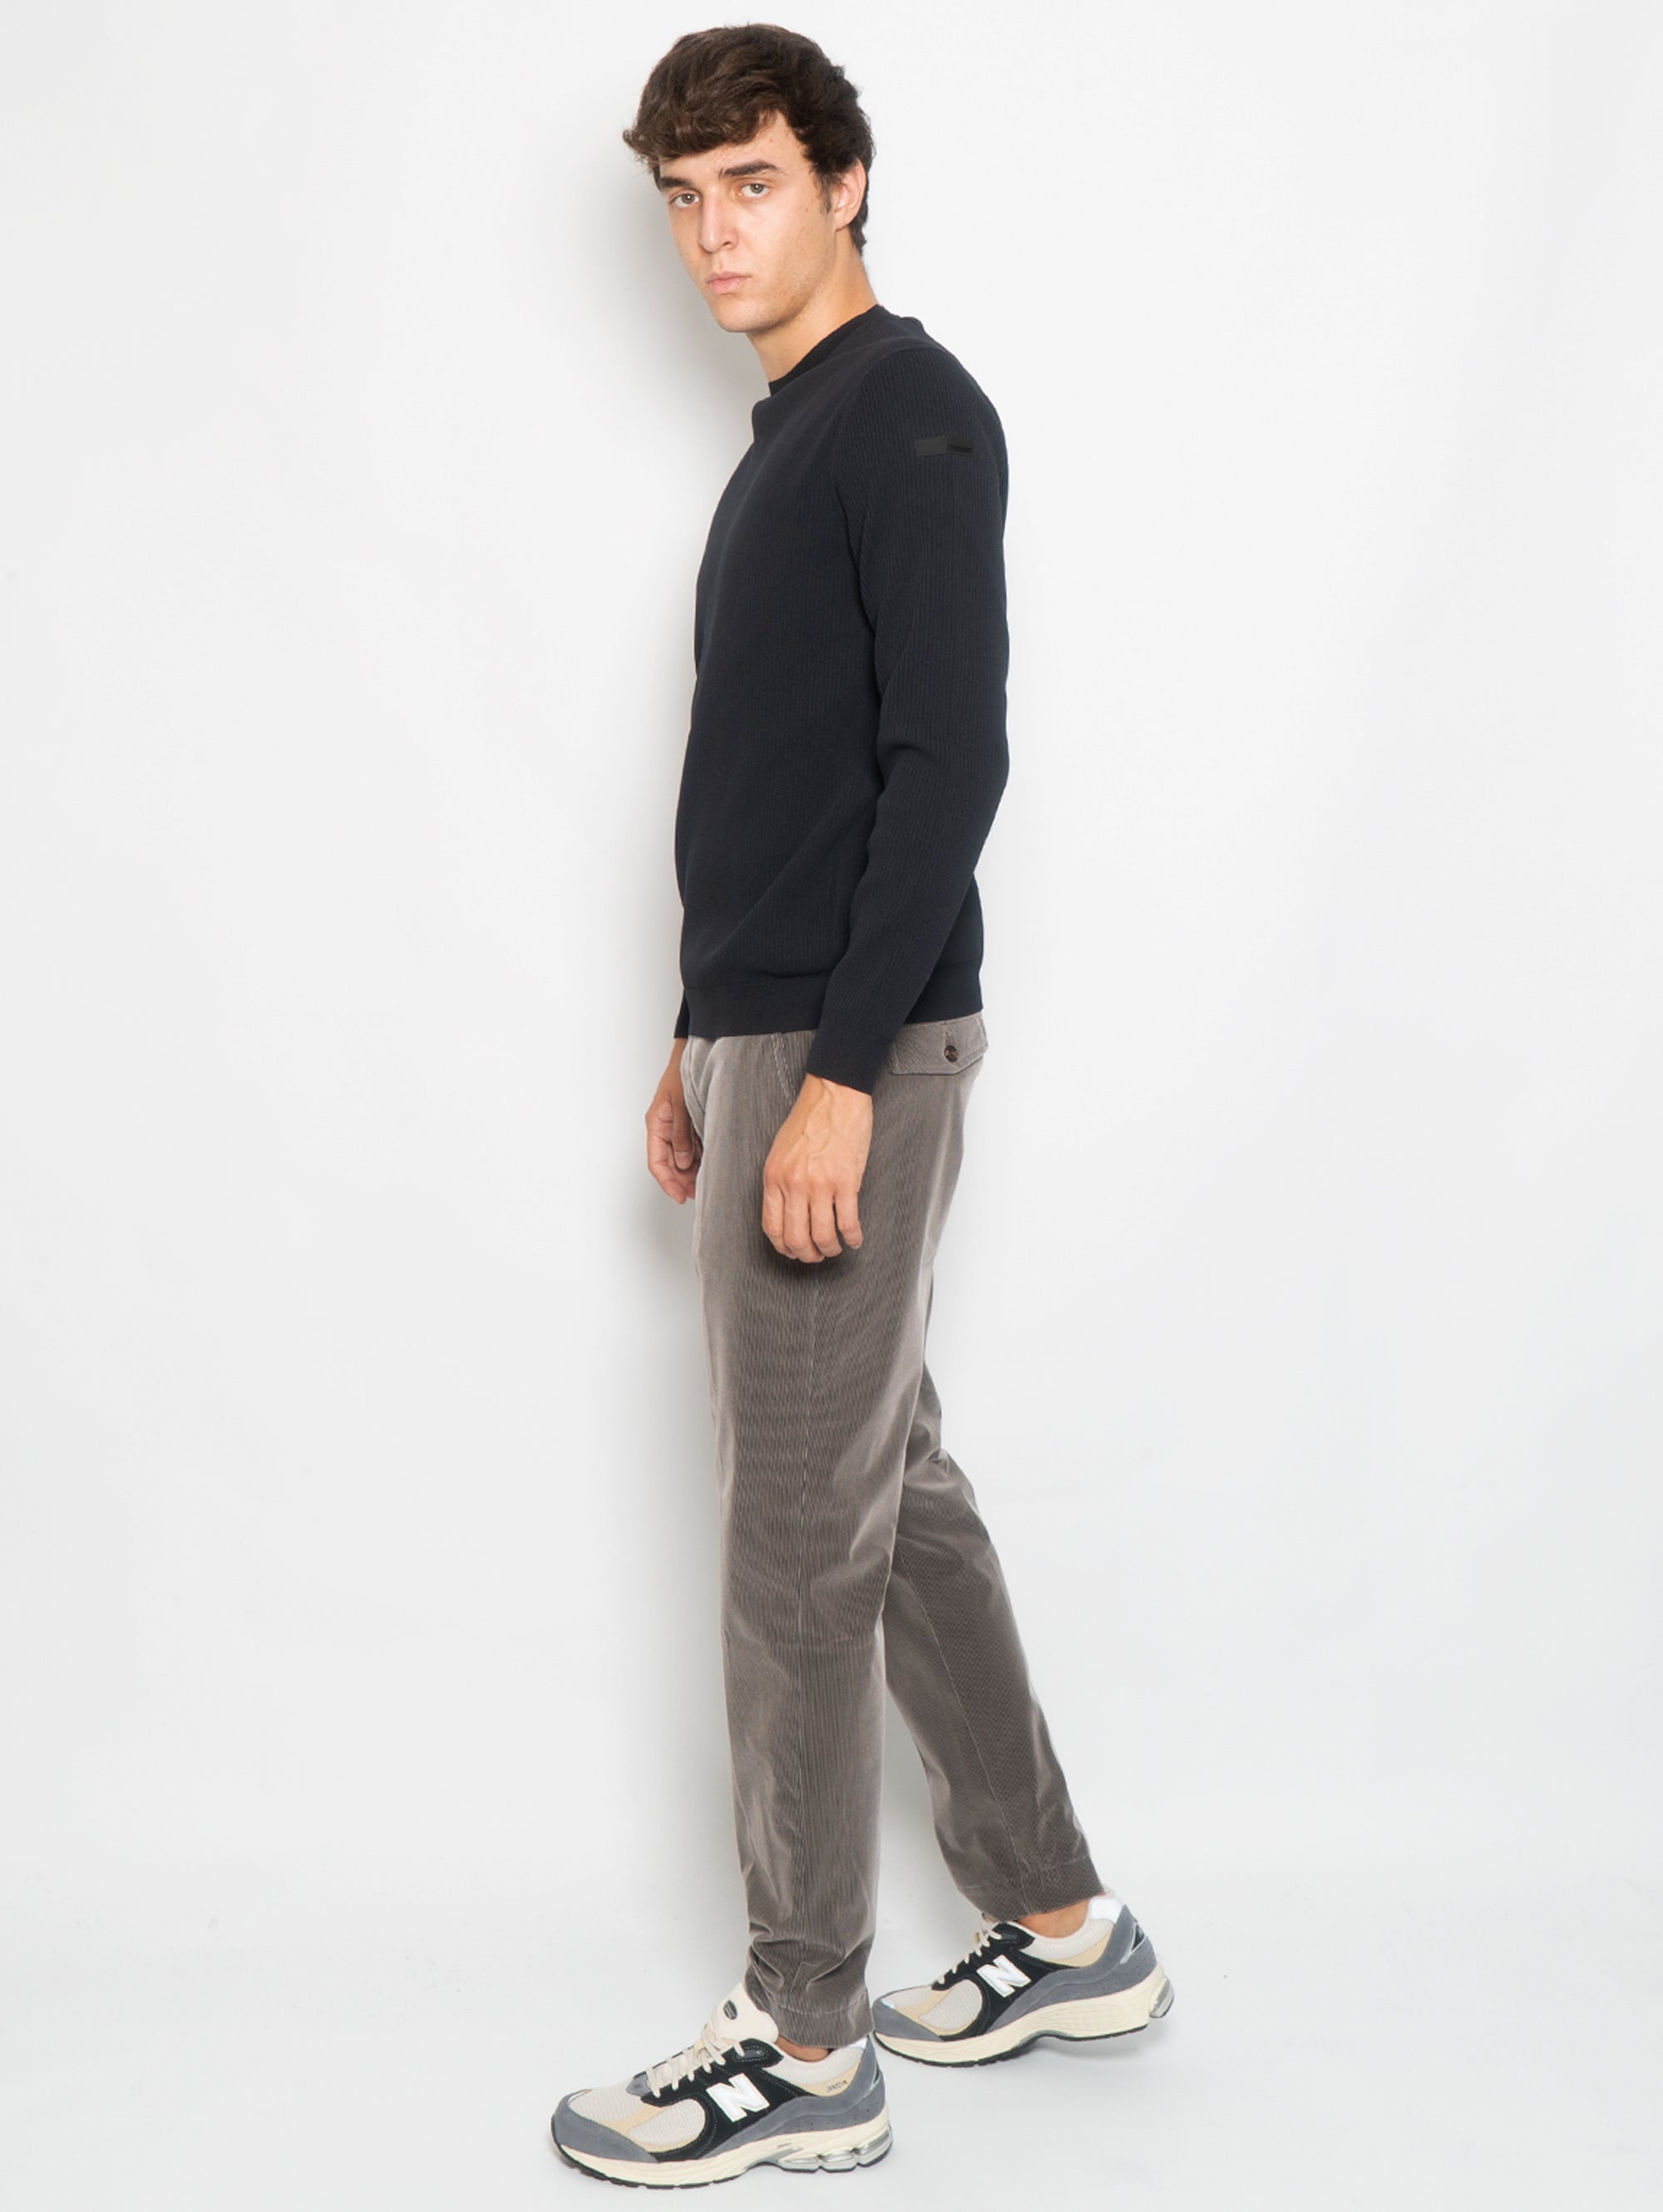 Chino trousers in dove gray techno velvet